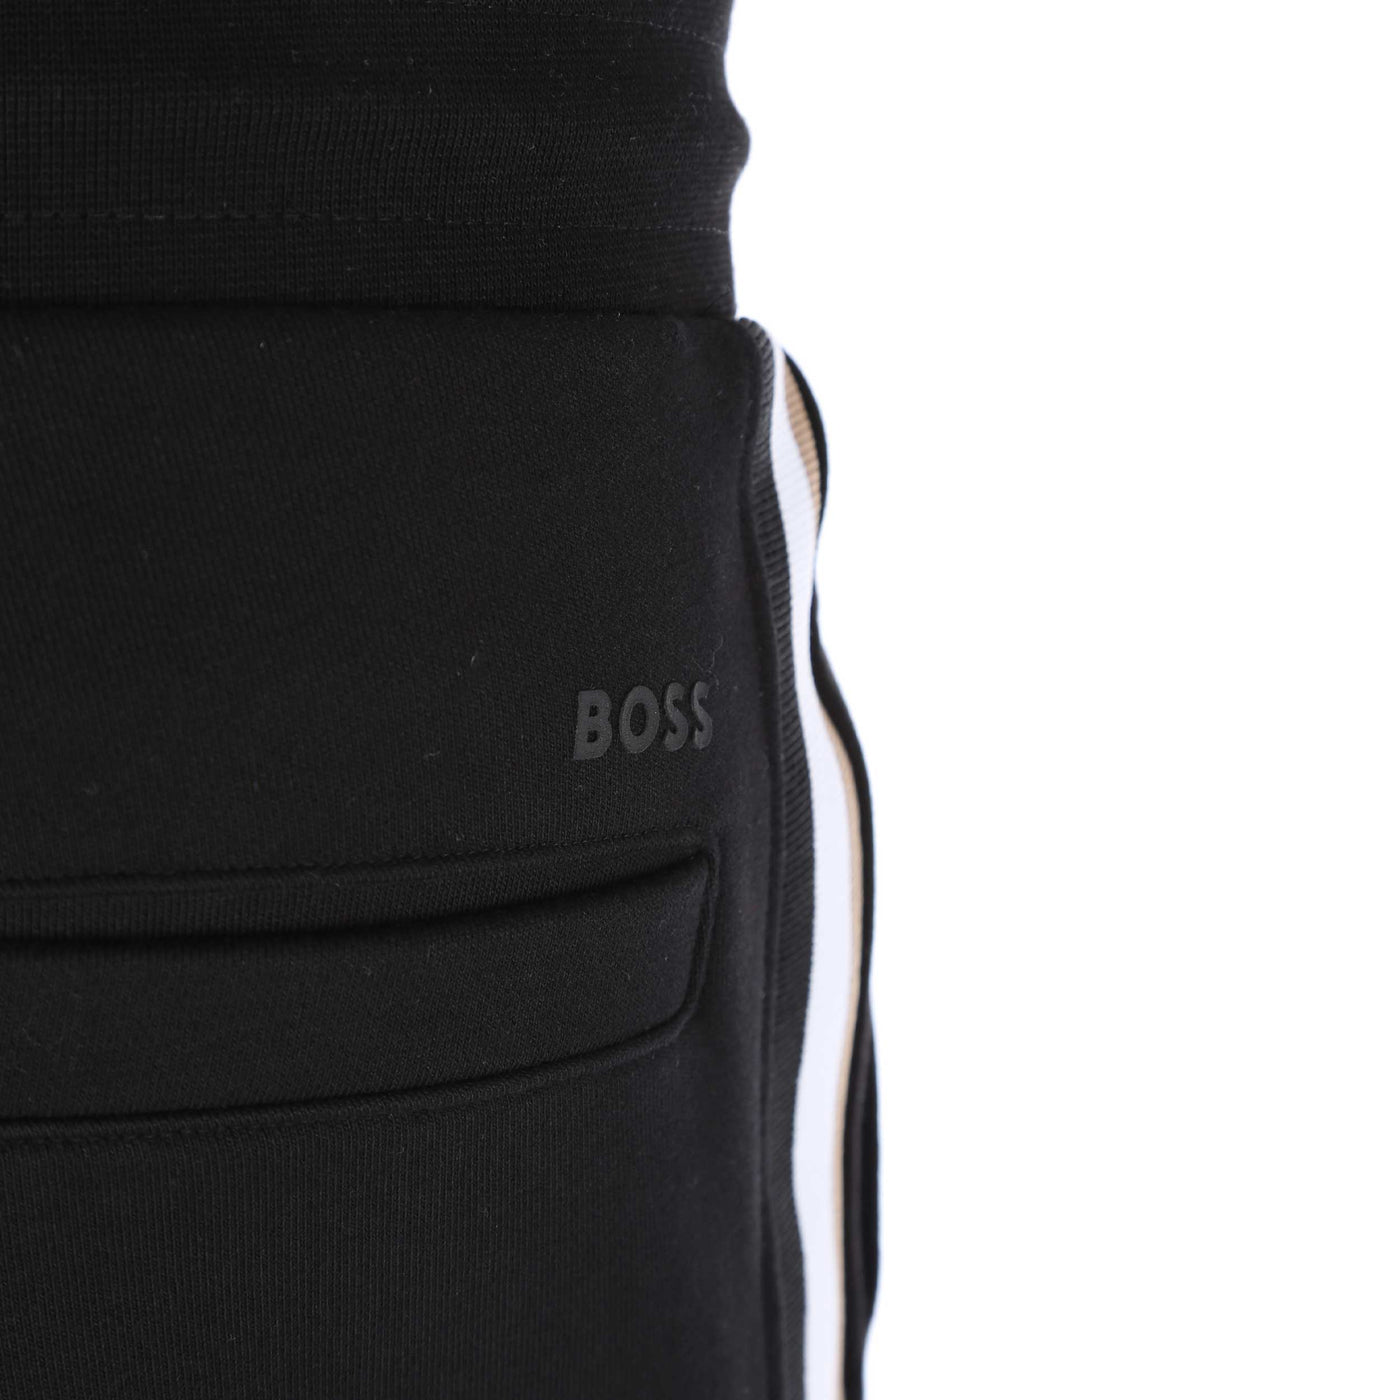 BOSS Lamont 83 Sweatpant in Black